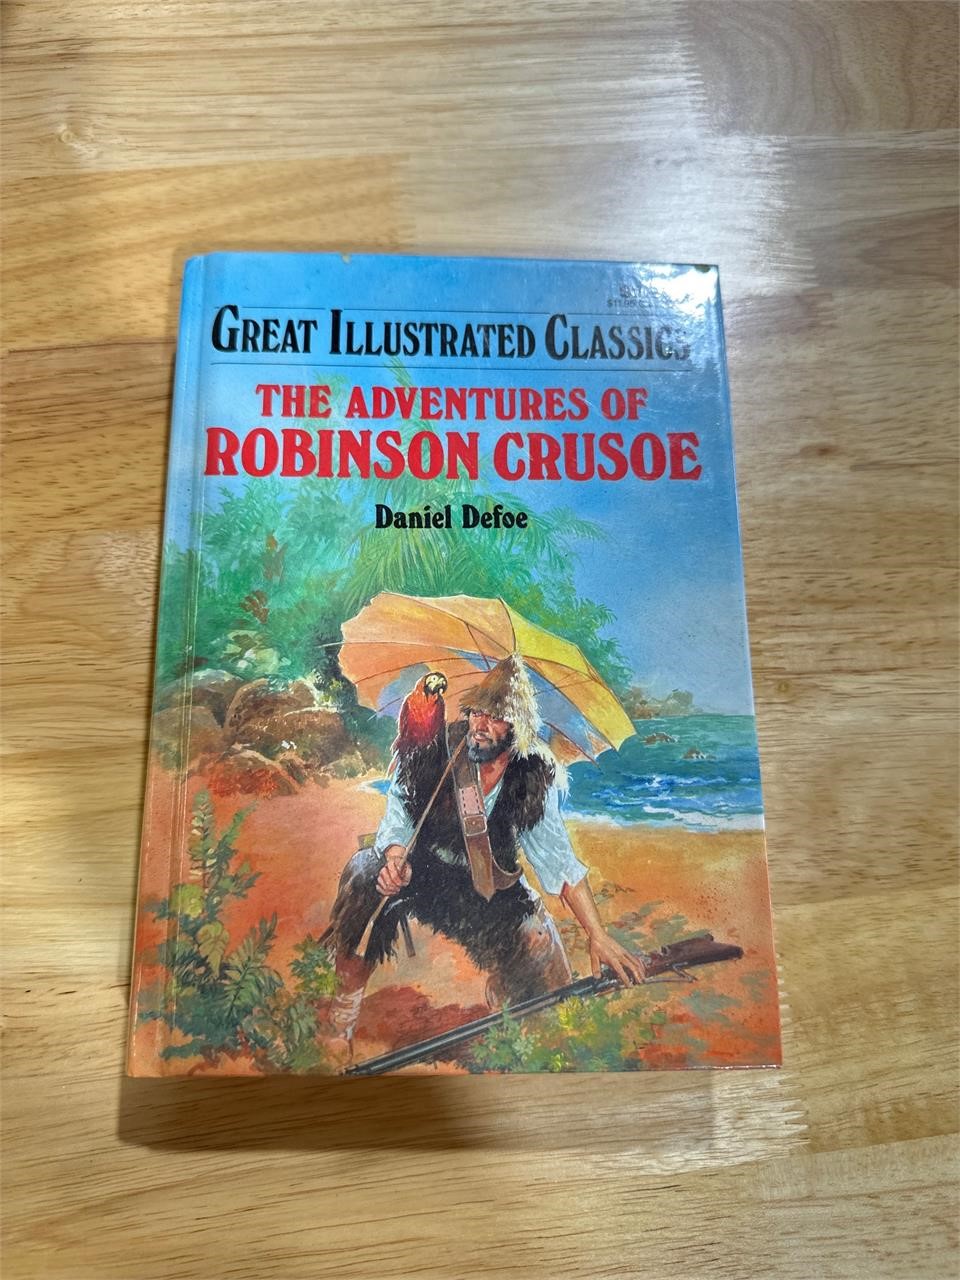 The adventures of Robertson Crusoe